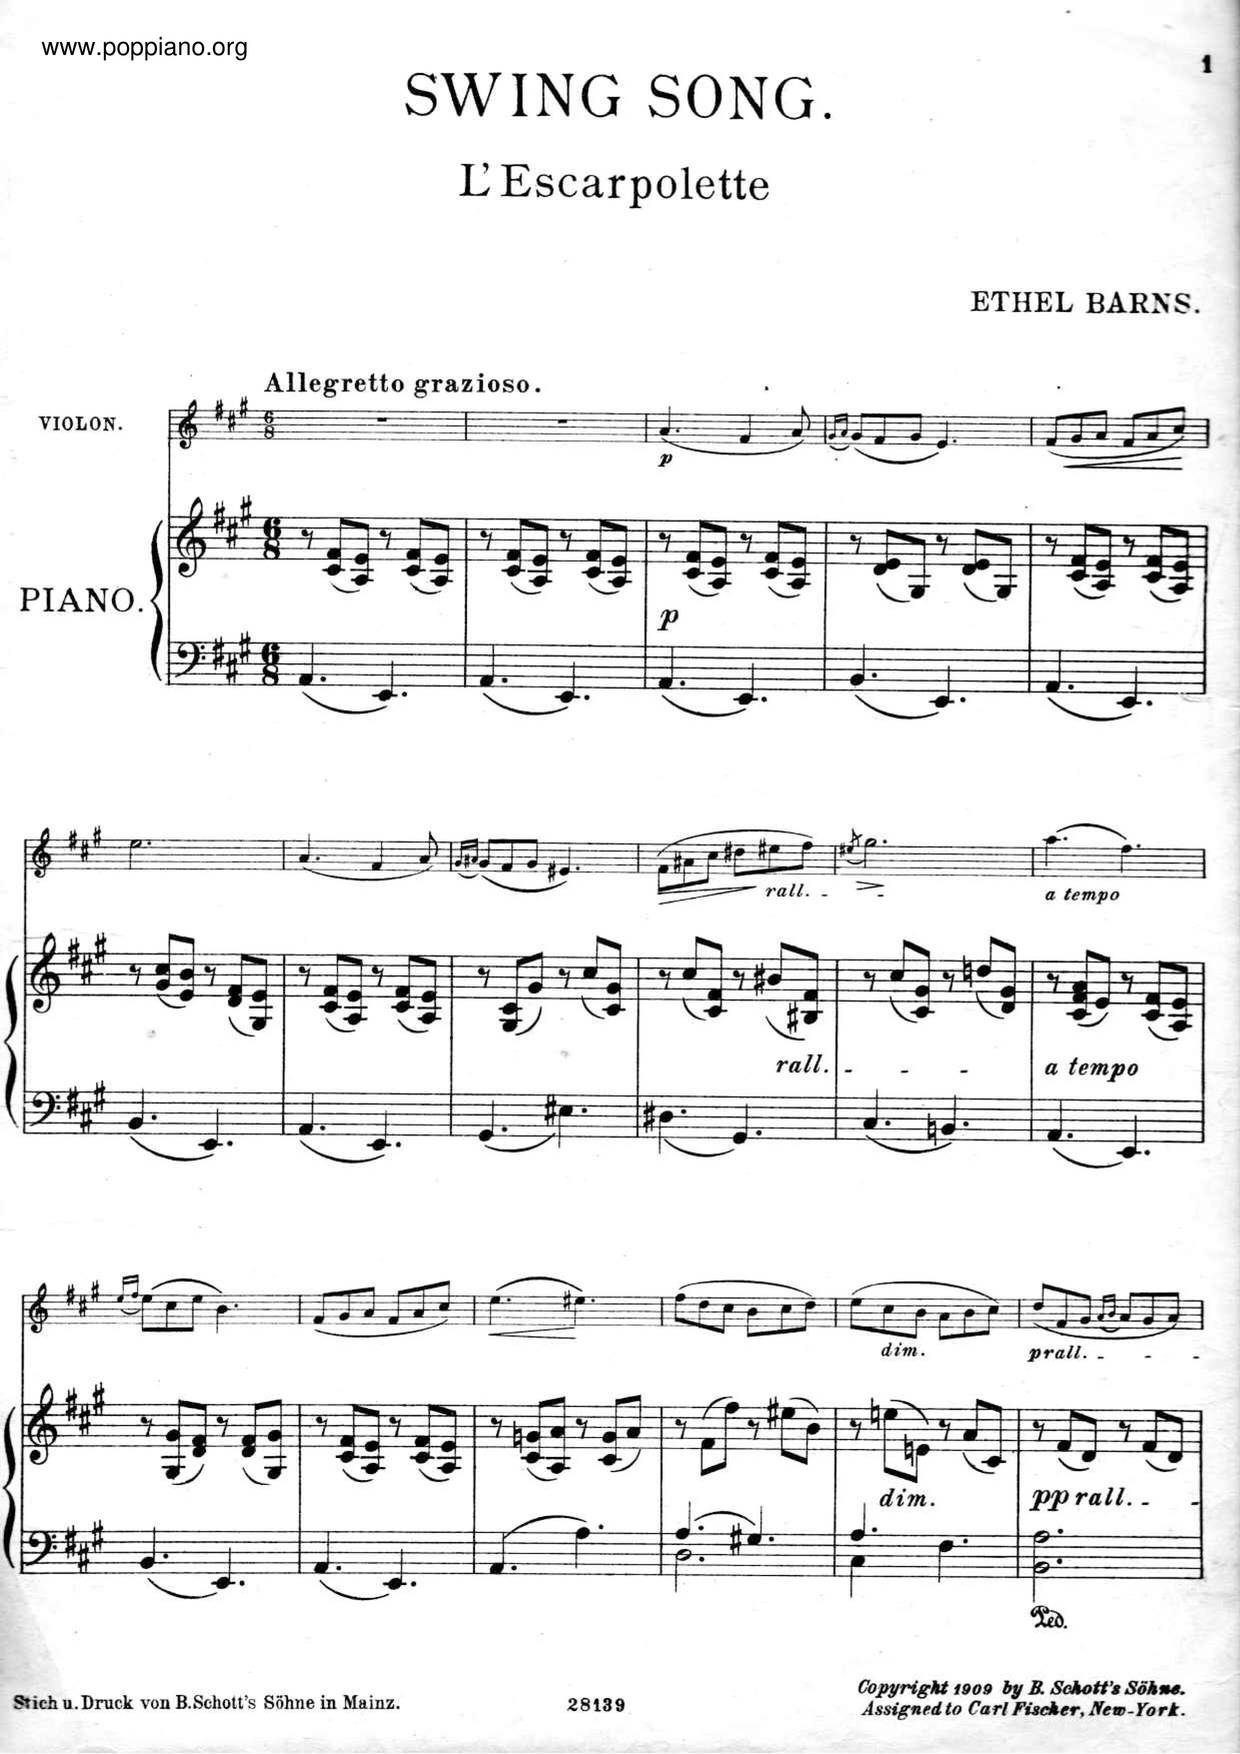 Swing Song / L'Escarpoletteピアノ譜